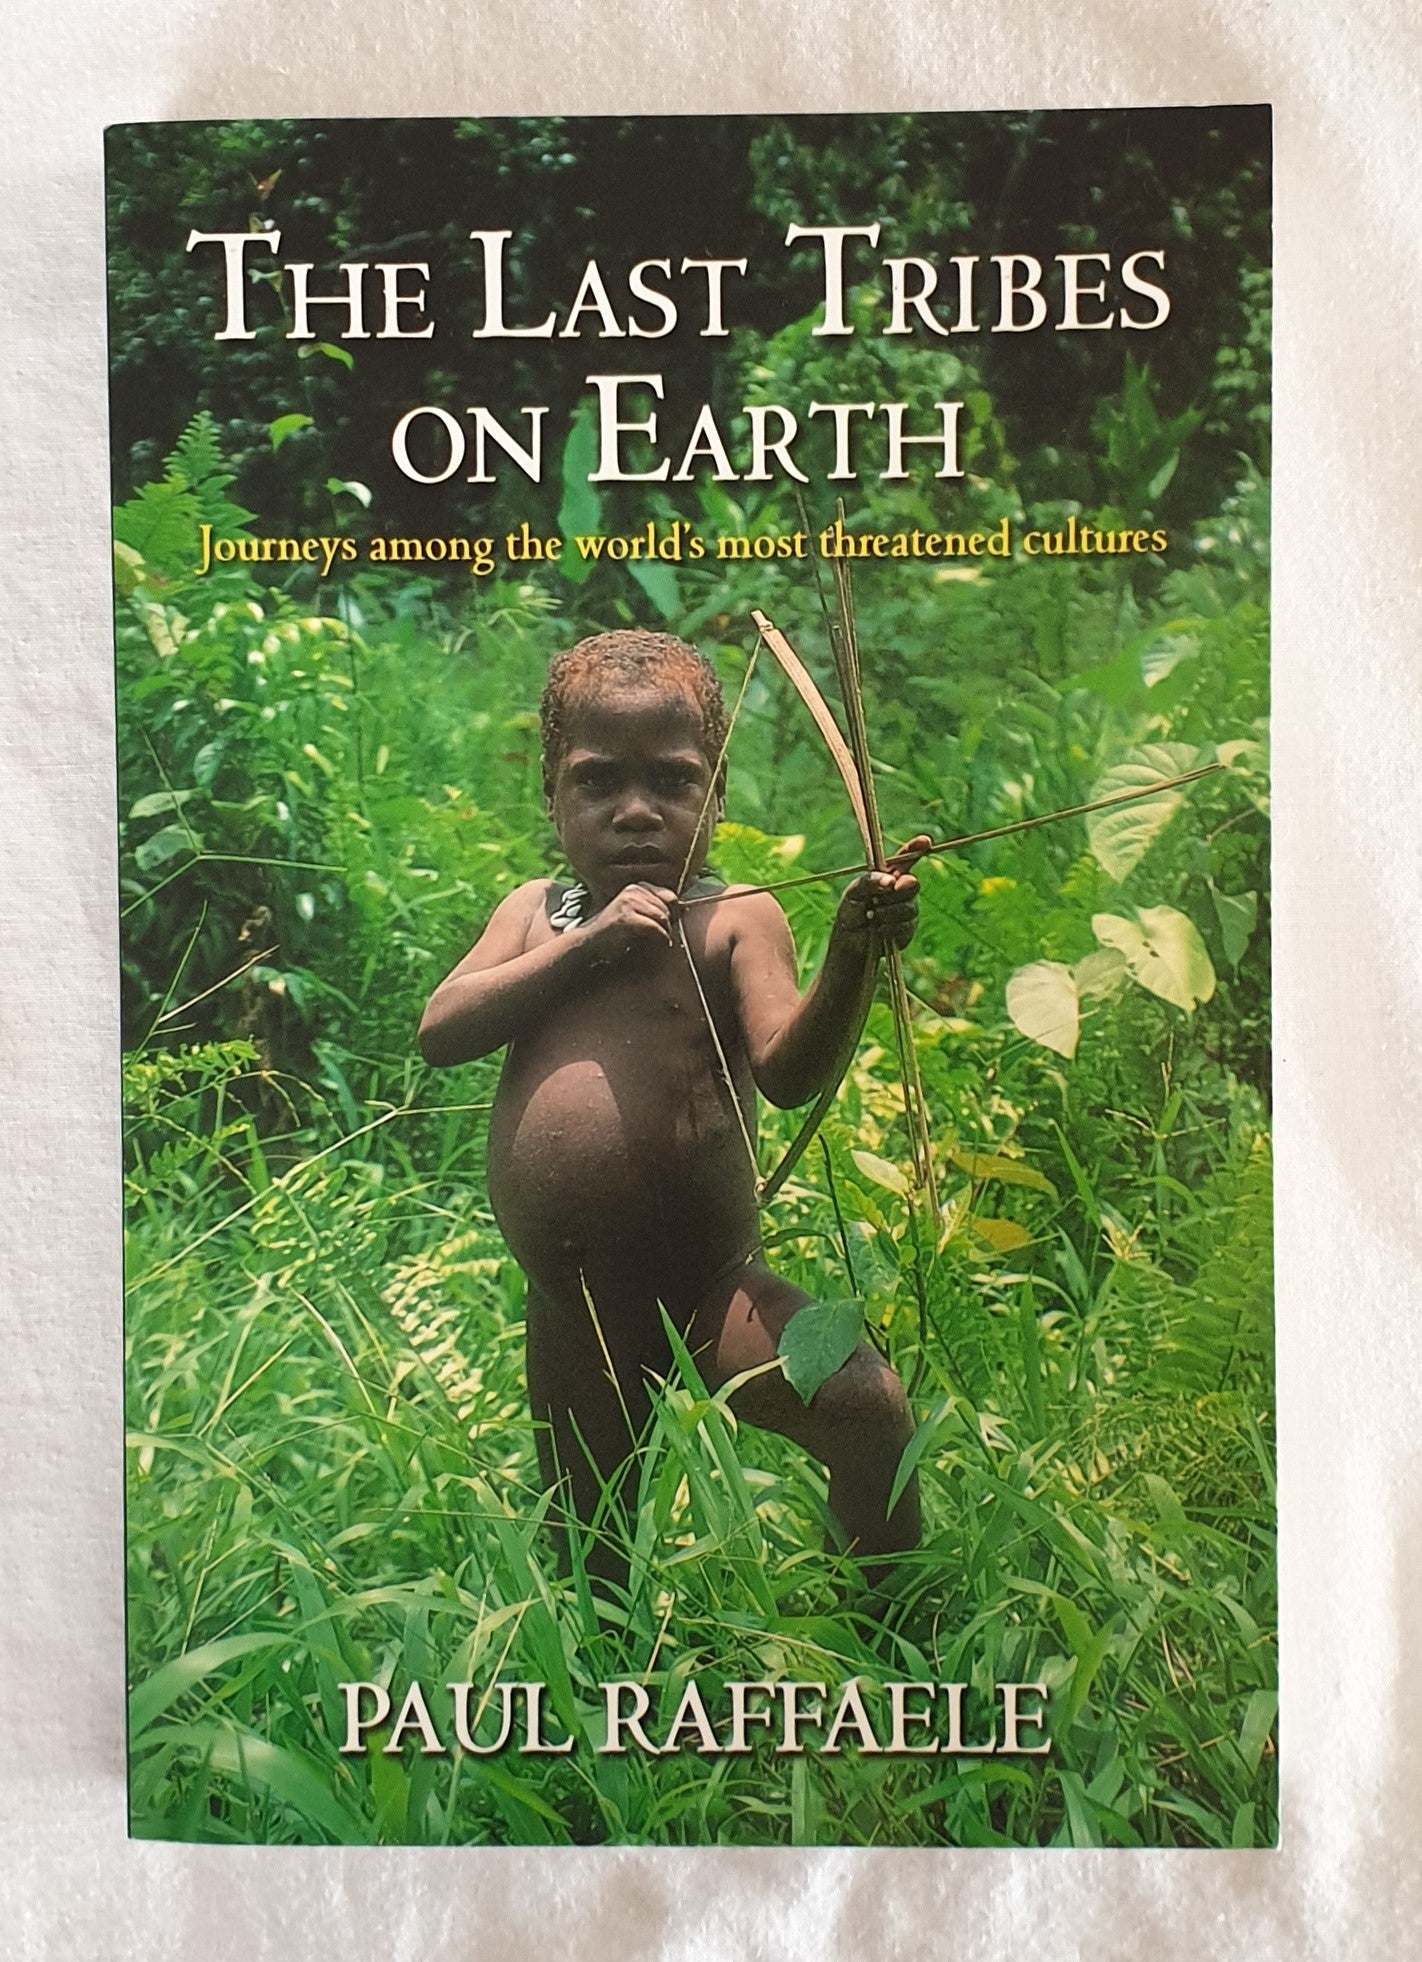 The Last Tribes on Earth by Paul Raffaele